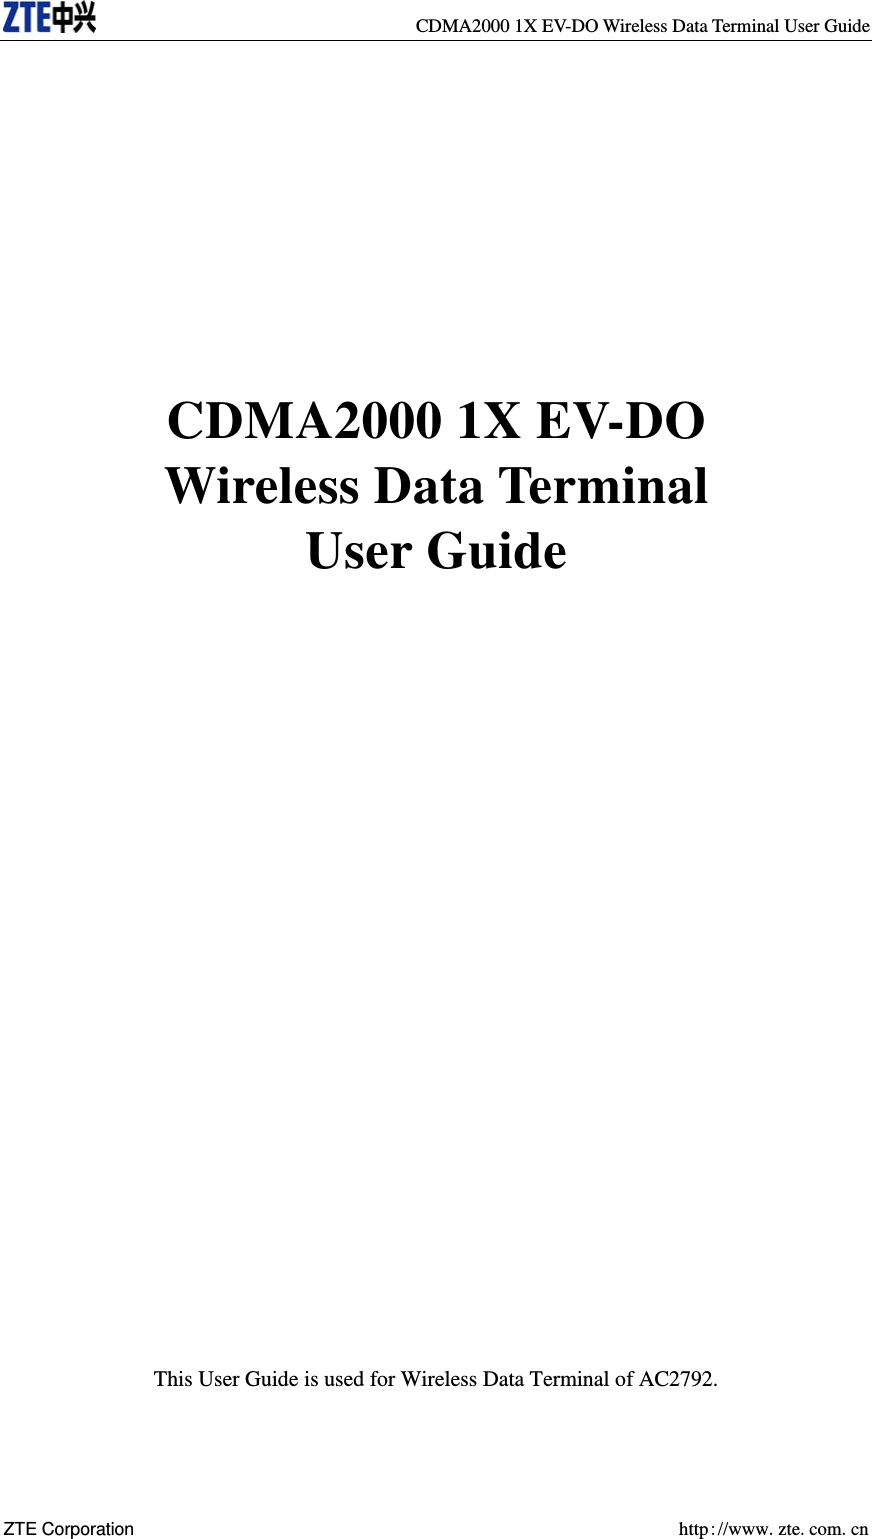   CDMA2000 1X EV-DO Wireless Data Terminal User Guide ZTE Corporation  http://www.zte.com.cn        CDMA2000 1X EV-DO Wireless Data Terminal User Guide                         This User Guide is used for Wireless Data Terminal of AC2792. 